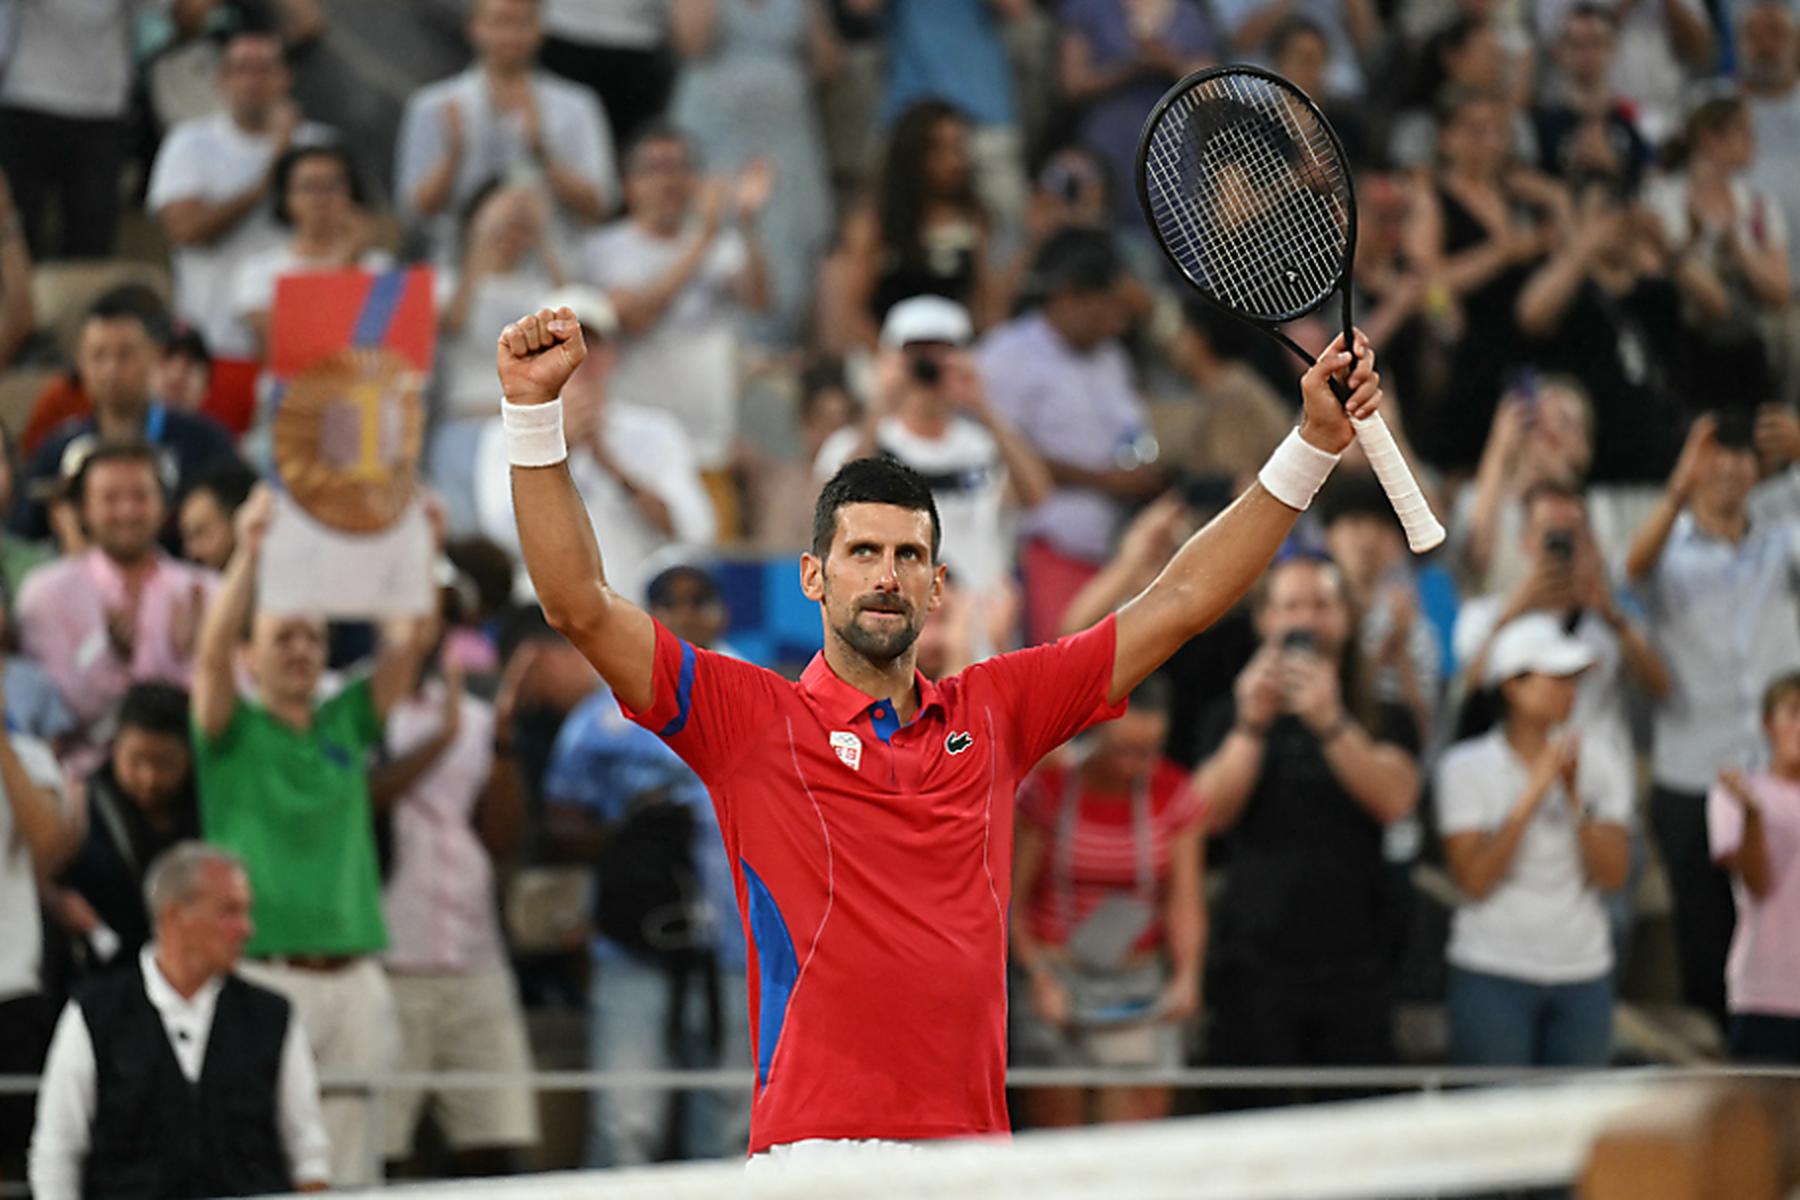 Paris: Djokovic wahrt Chance auf Tennis-Gold, Favoritin Swiatek out